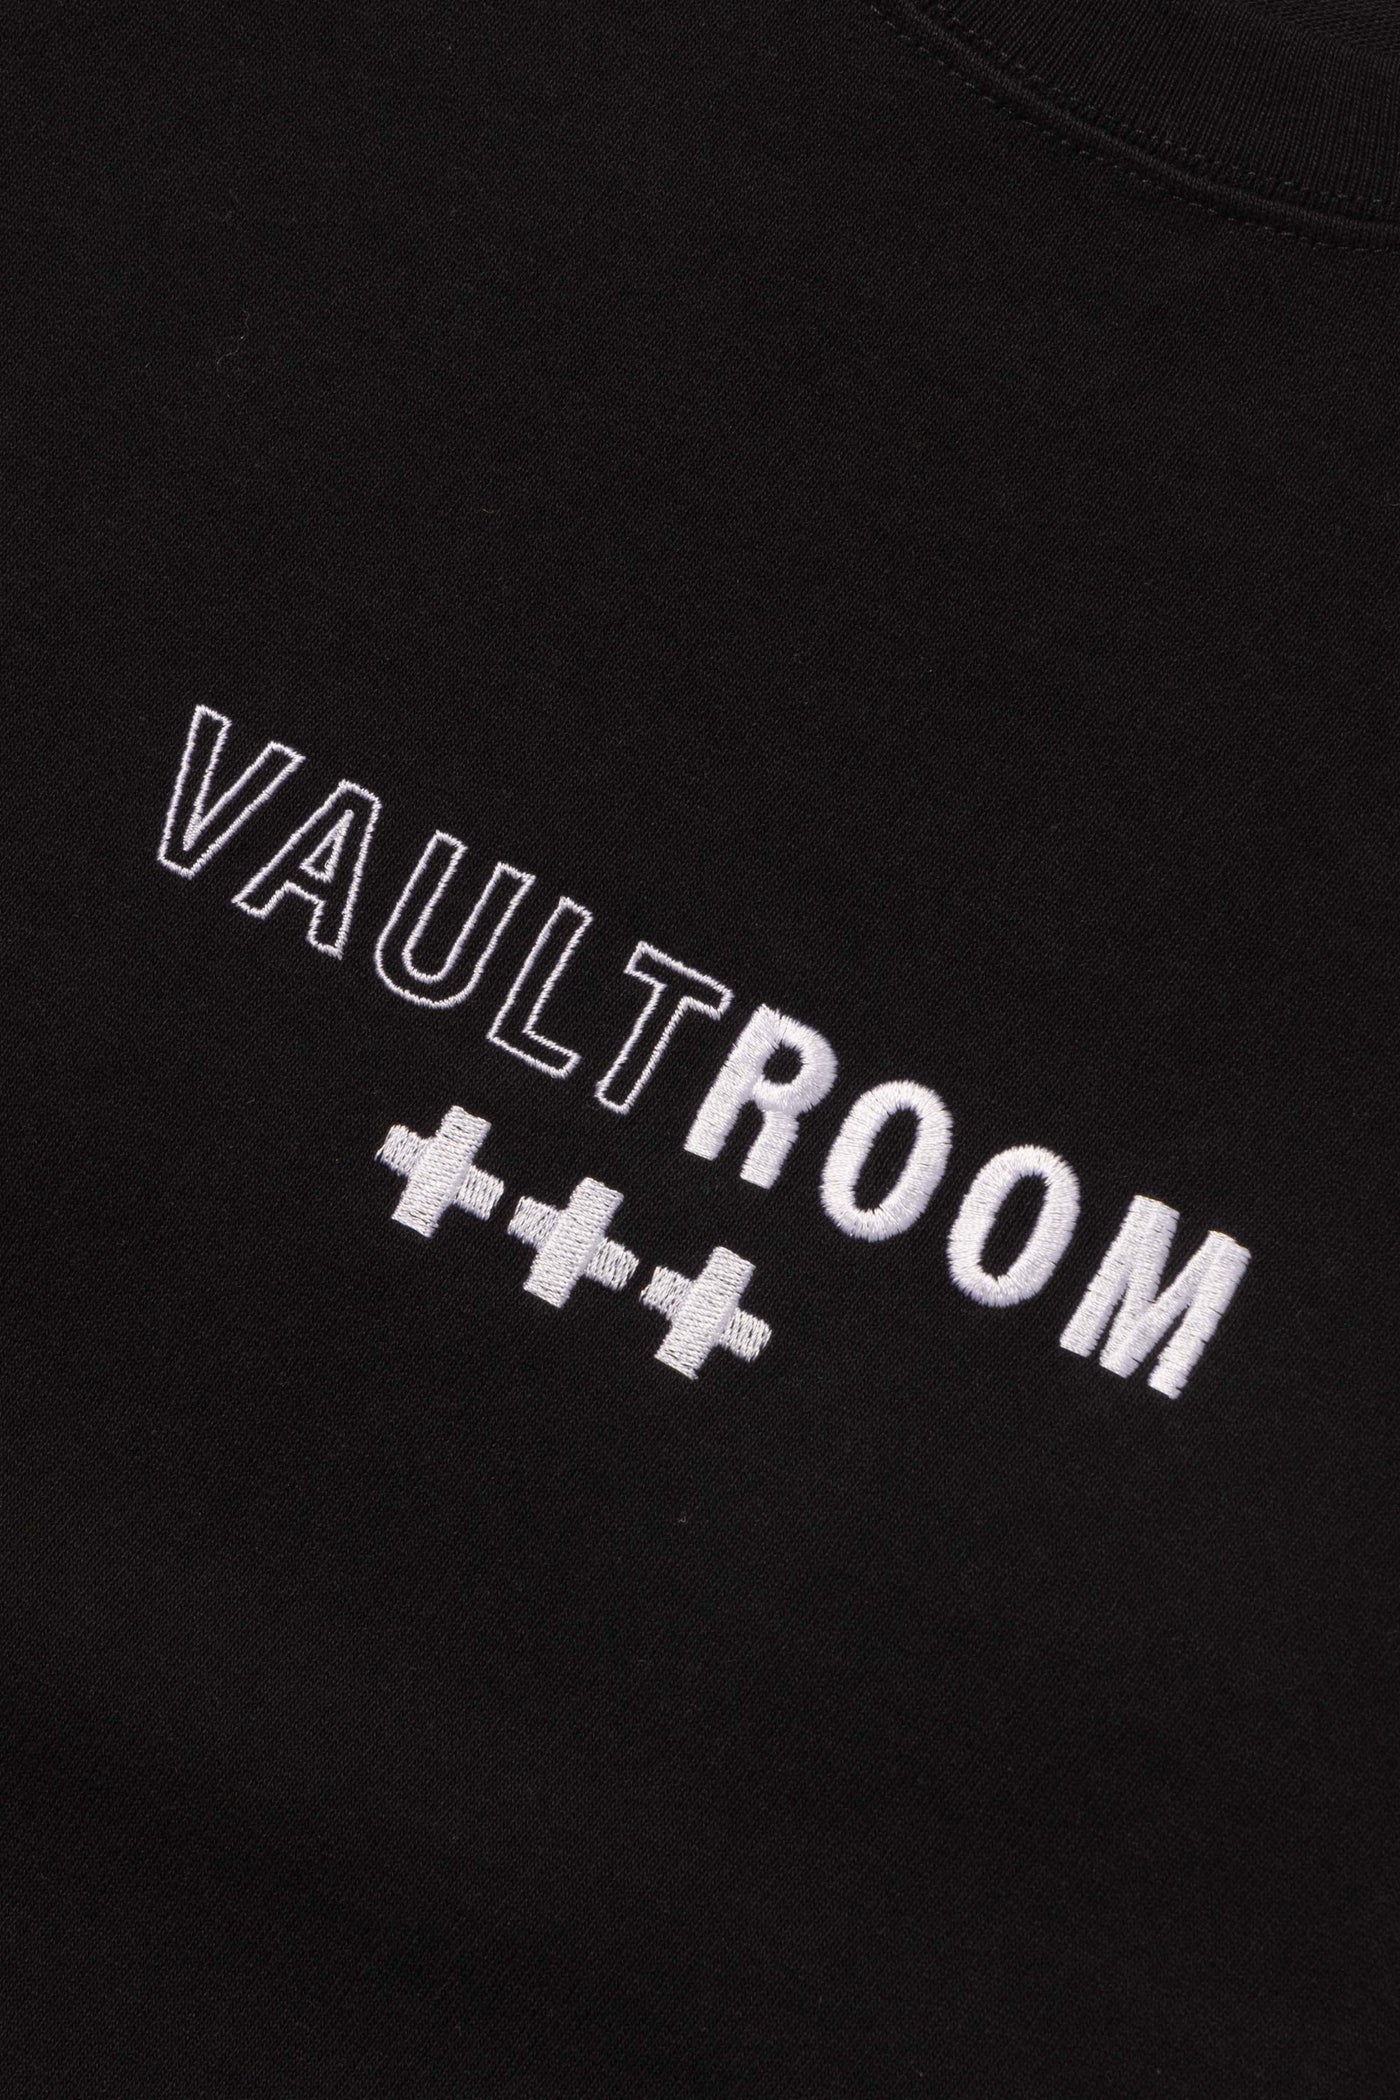 vaultroom "Cheeky"  TEE / BLK